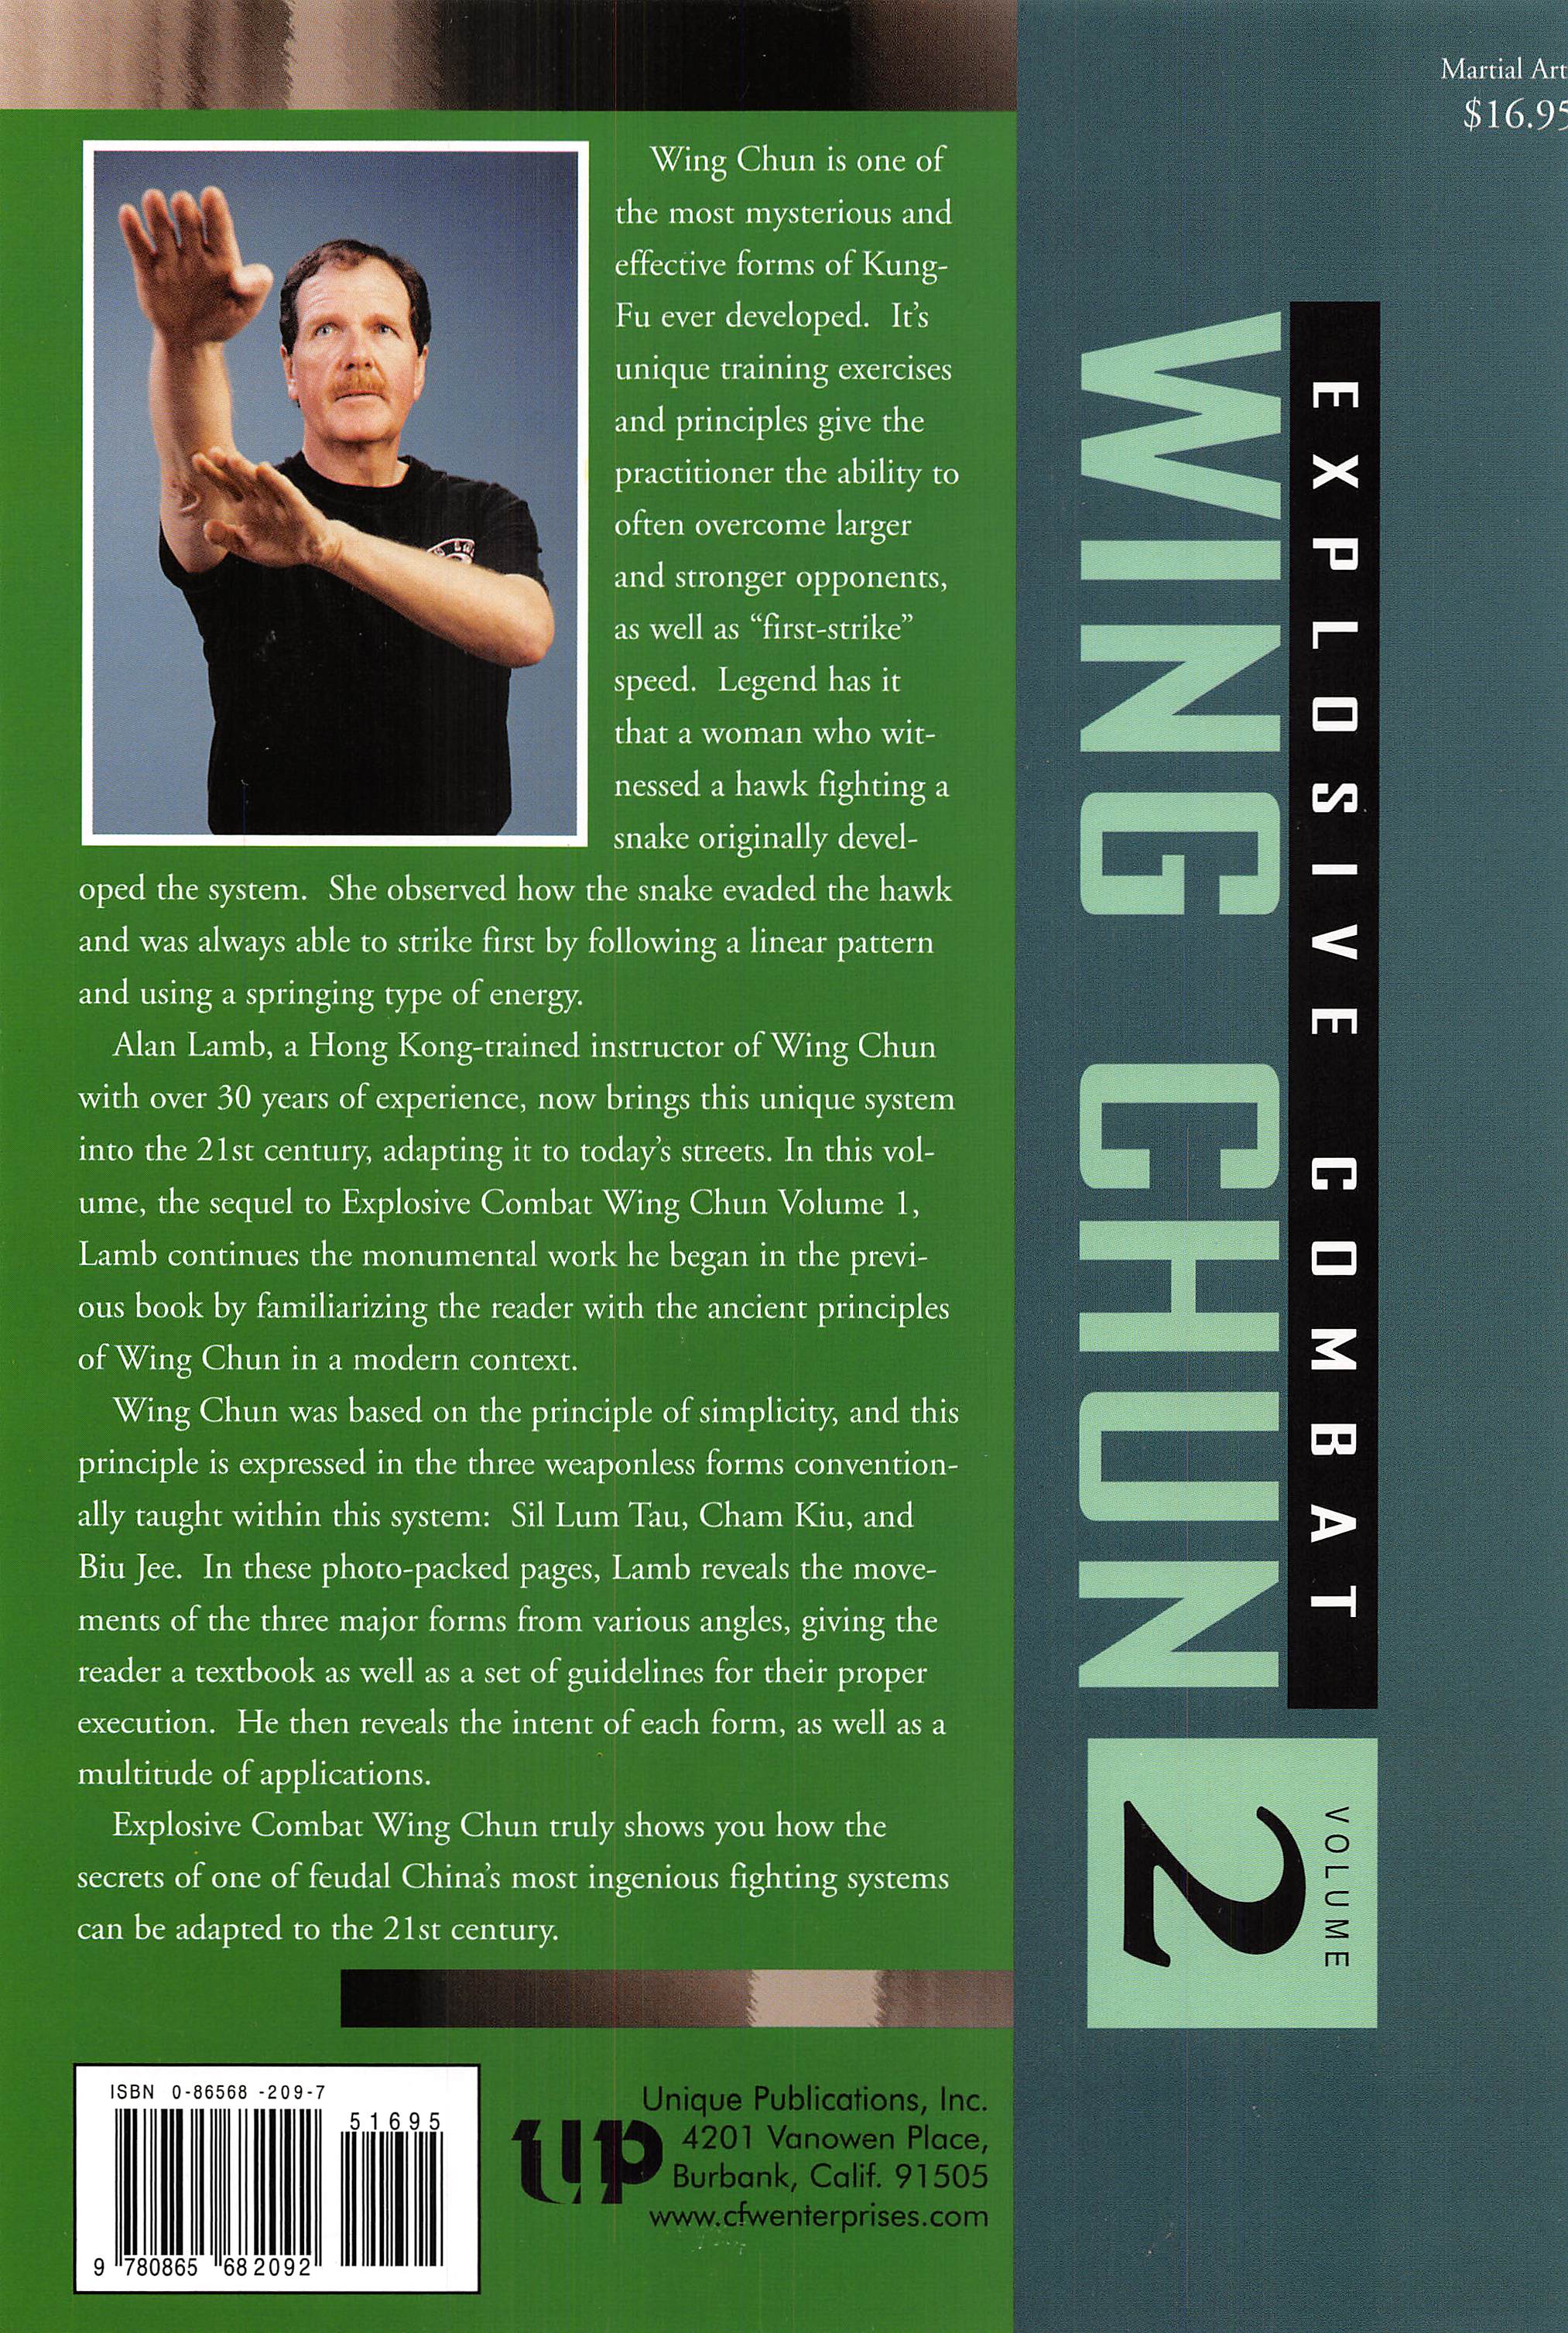 Explosive Combat Wing Chun #2 Book Alan Lamb